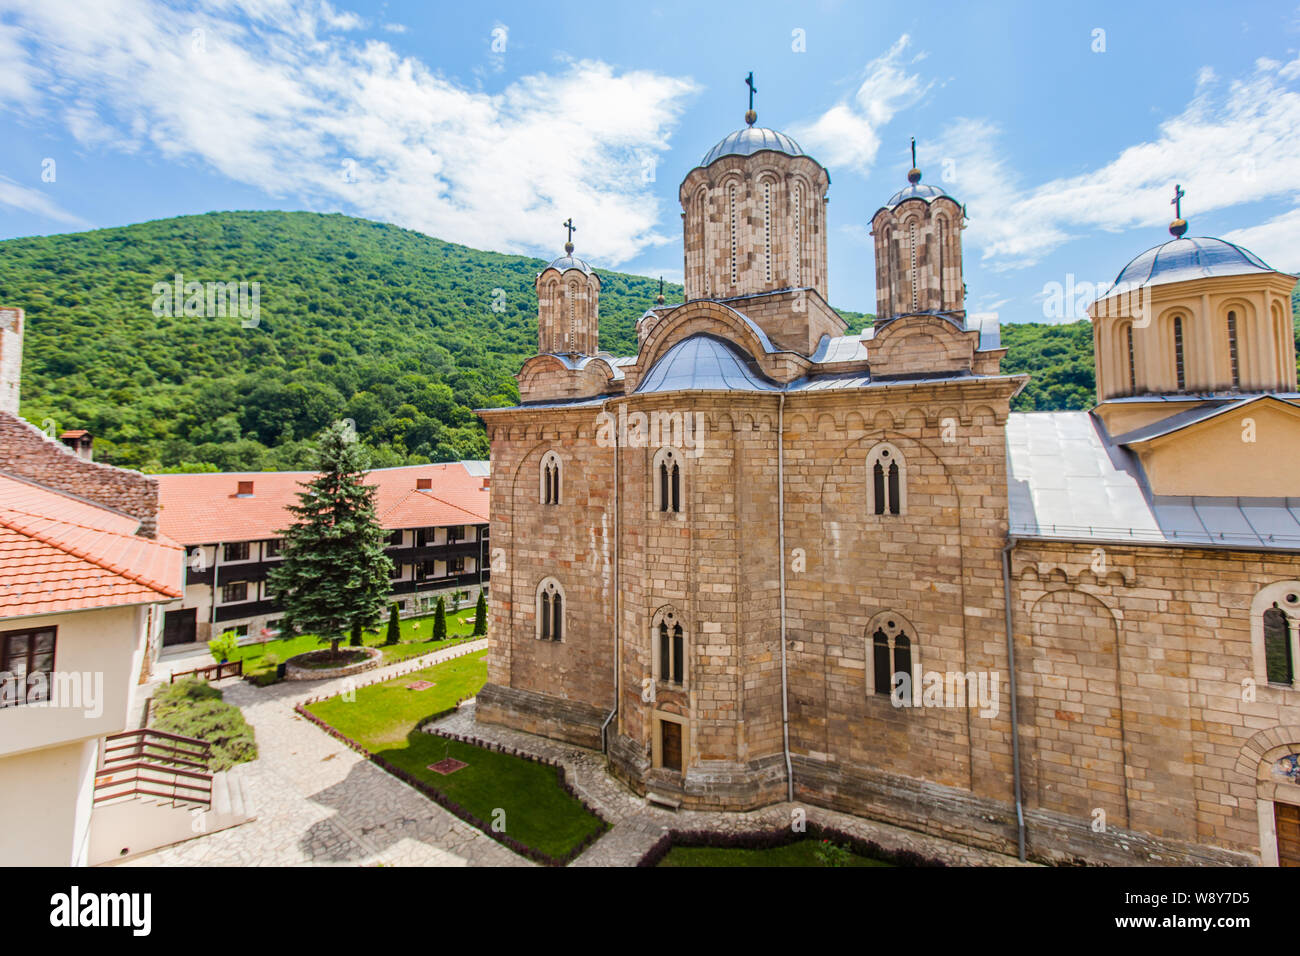 Medievale ortodossa serba Manasija (Resava) Monastero e chiesa della Santissima Trinità, Serbia, fondata dal Despota Stefan Lazarevic. Foto Stock